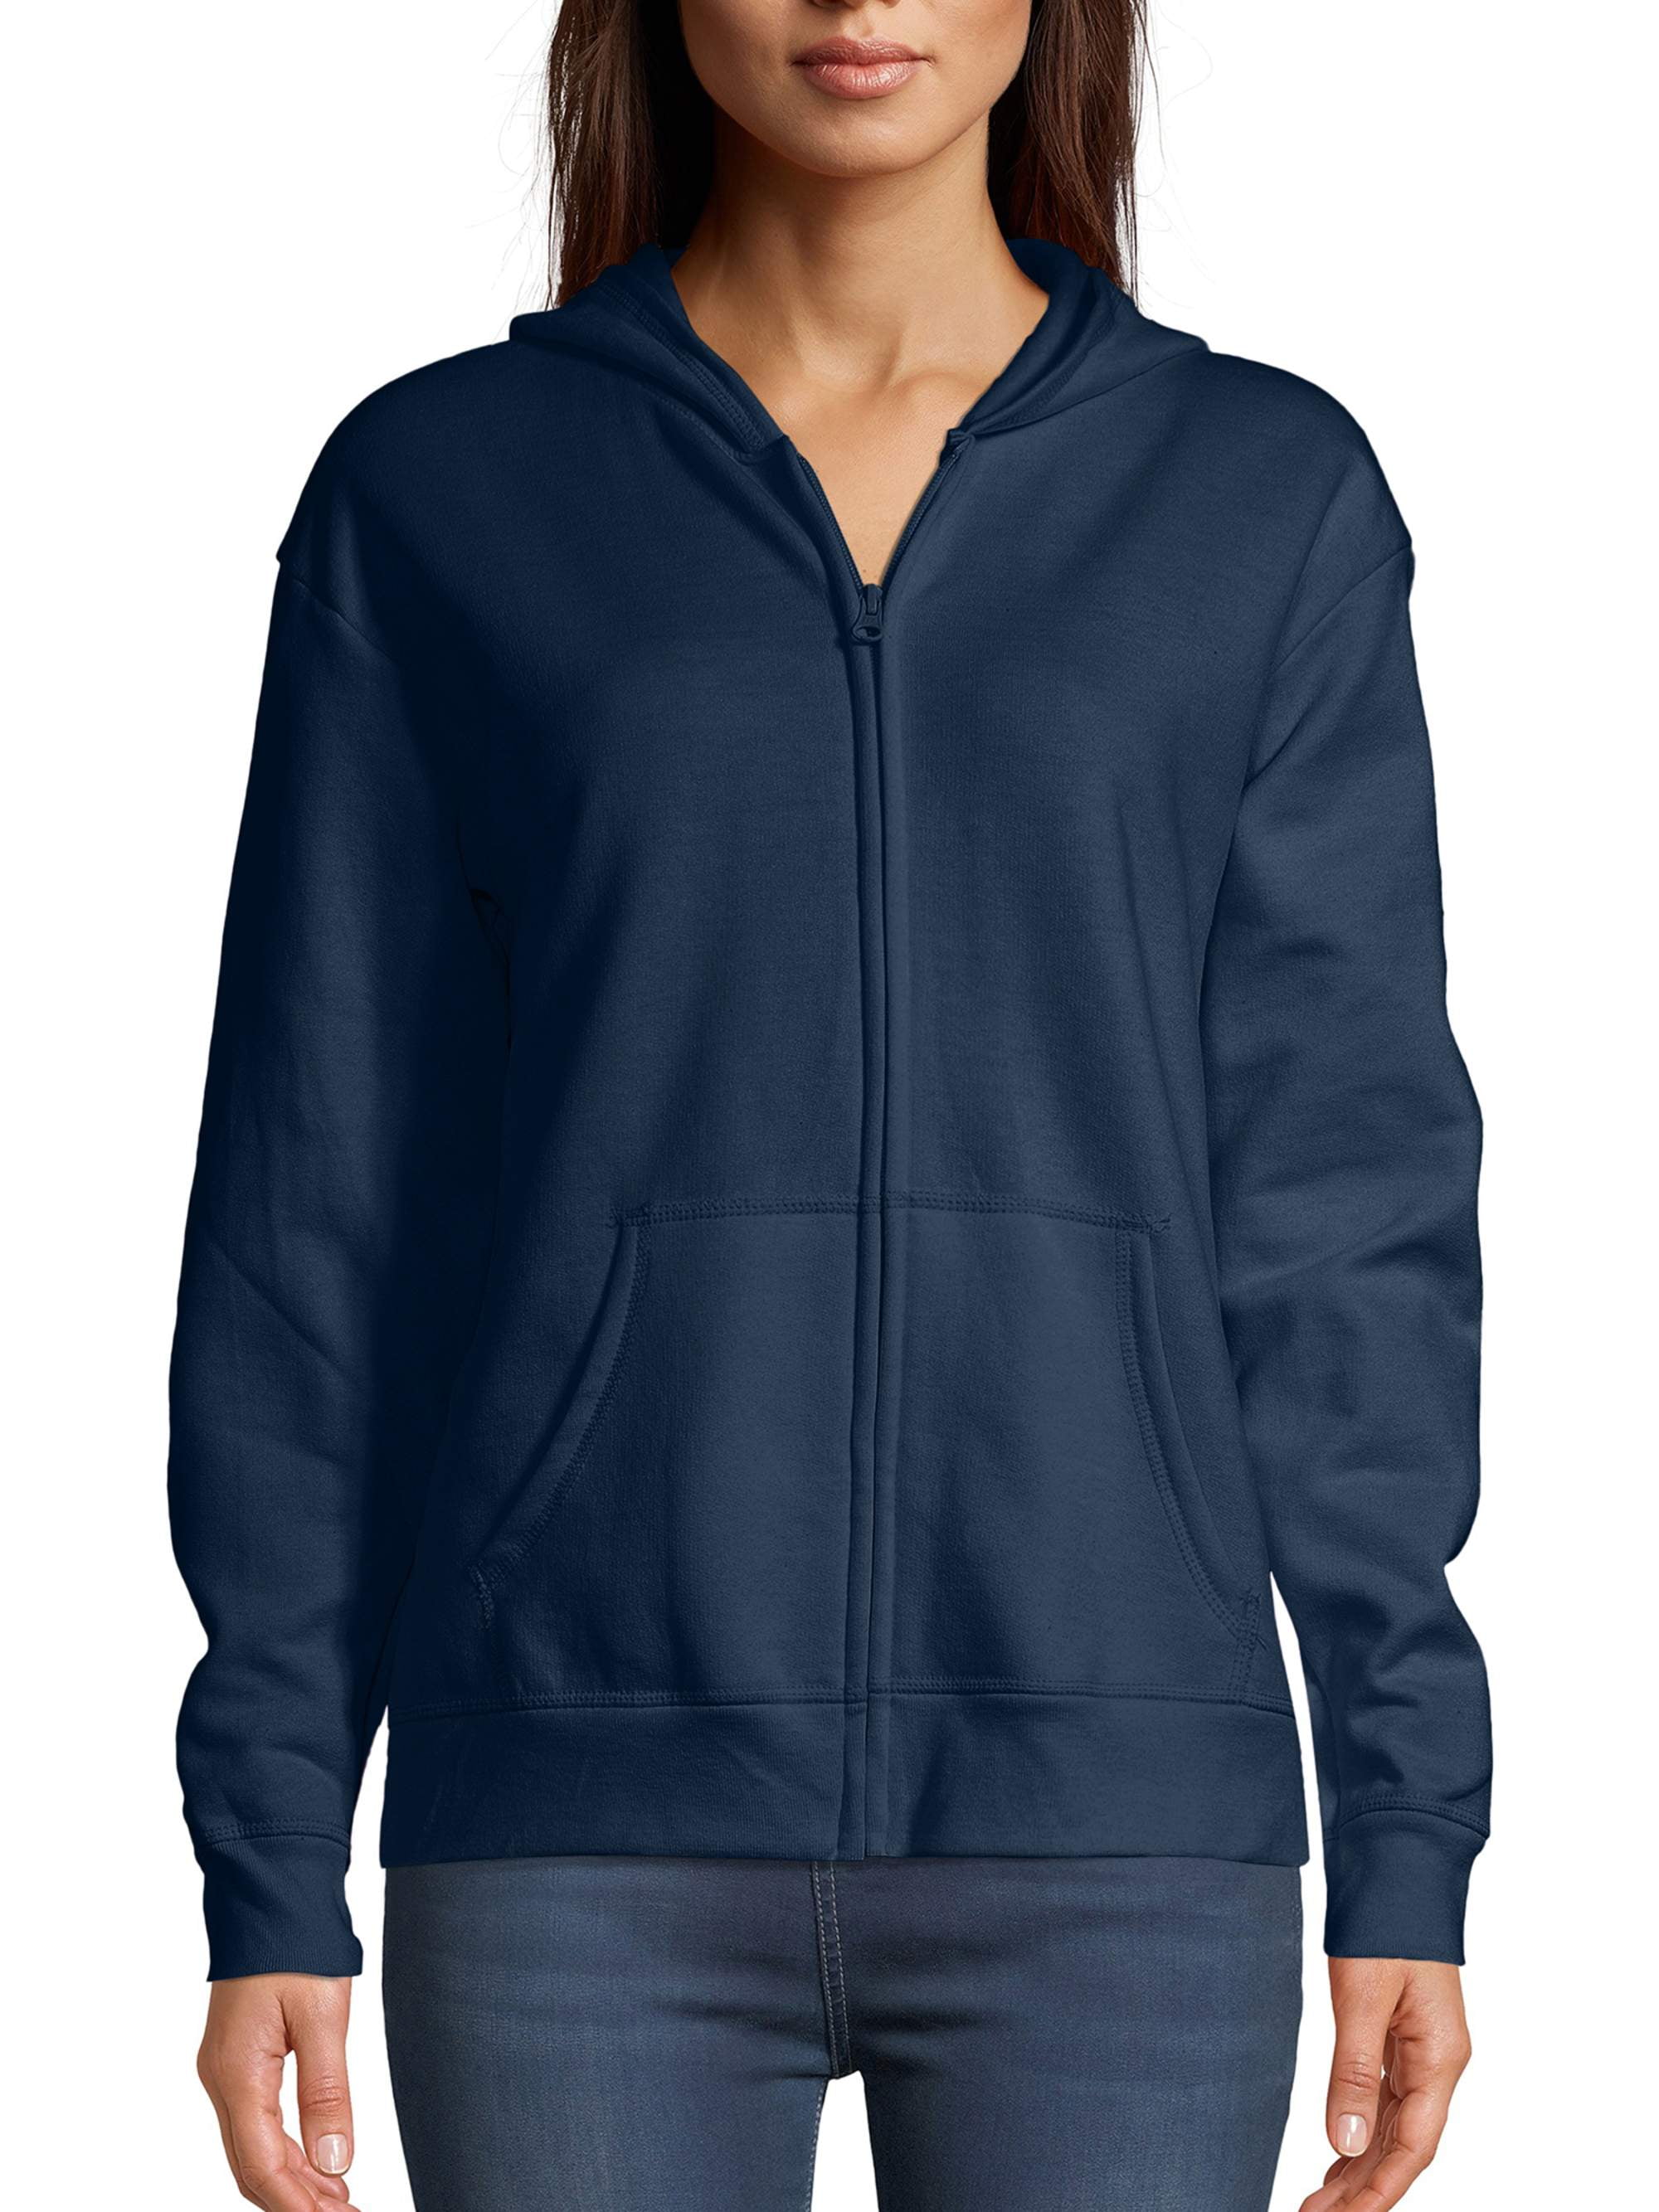 New Just My Size 1X  Eco Smart Sweats Zip Front Hooded Sweatshirt  Heather Blue 